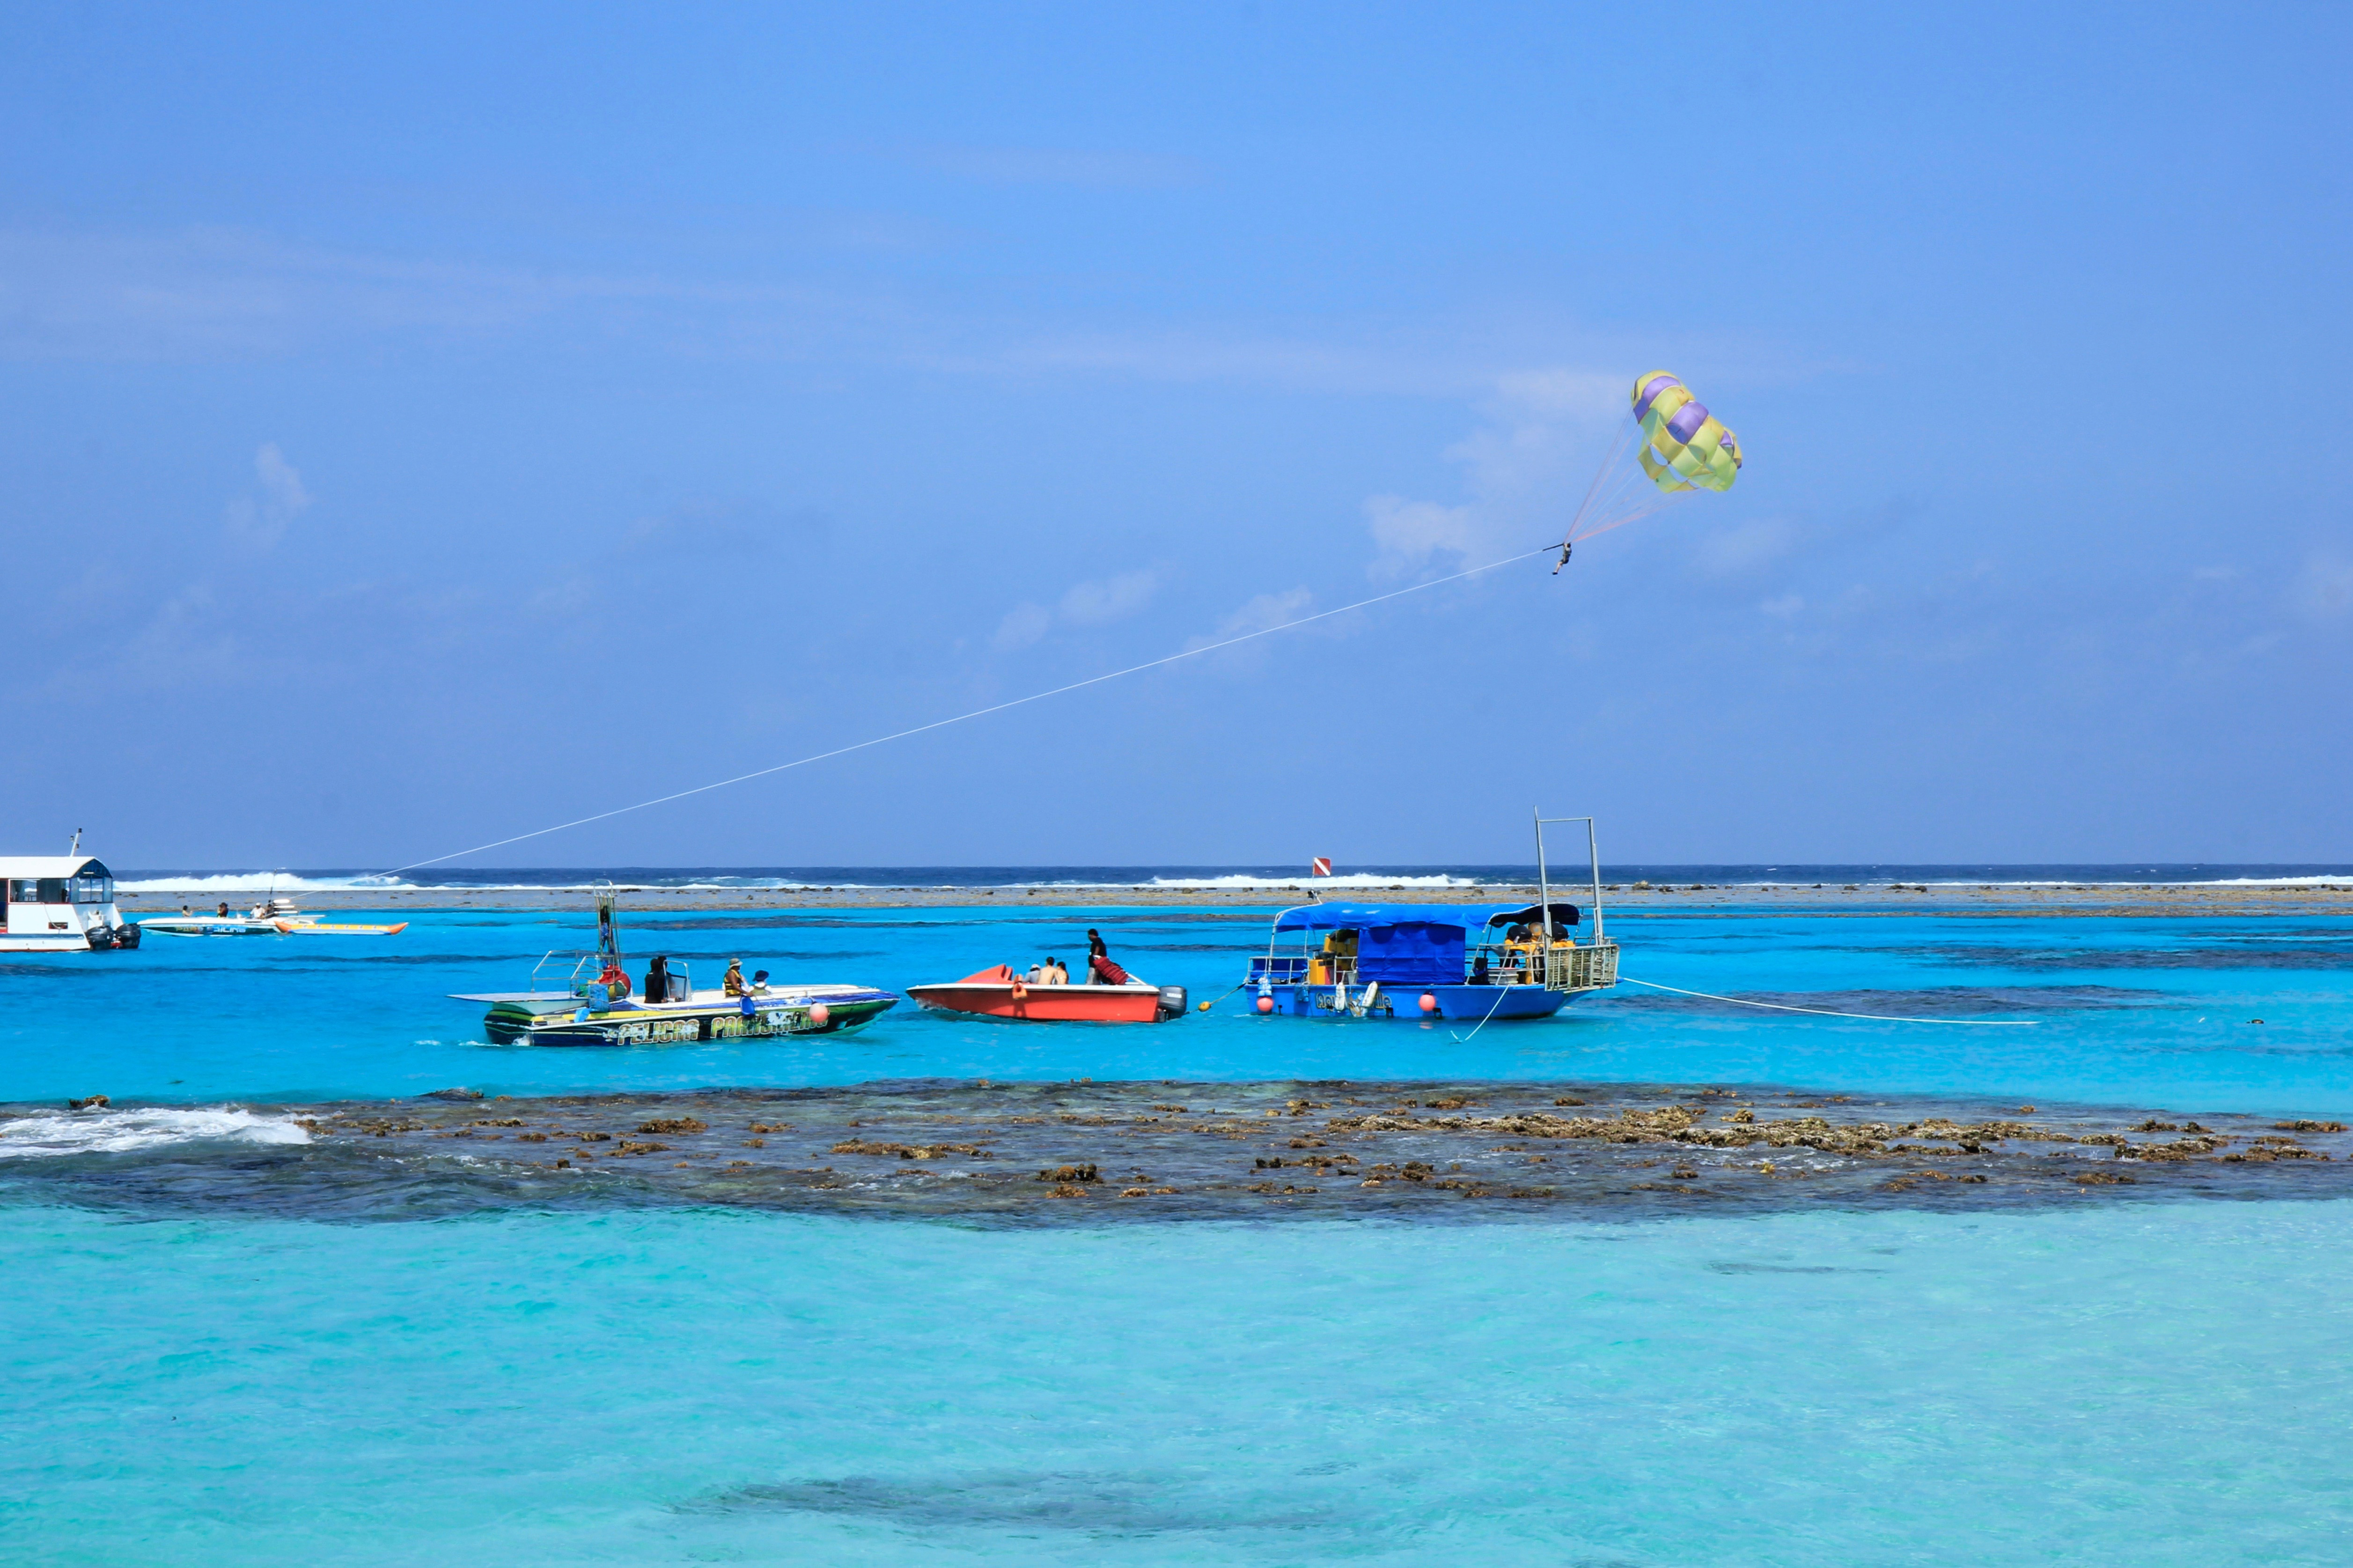 Saipan Island and seascape in Guam image - Free stock ...